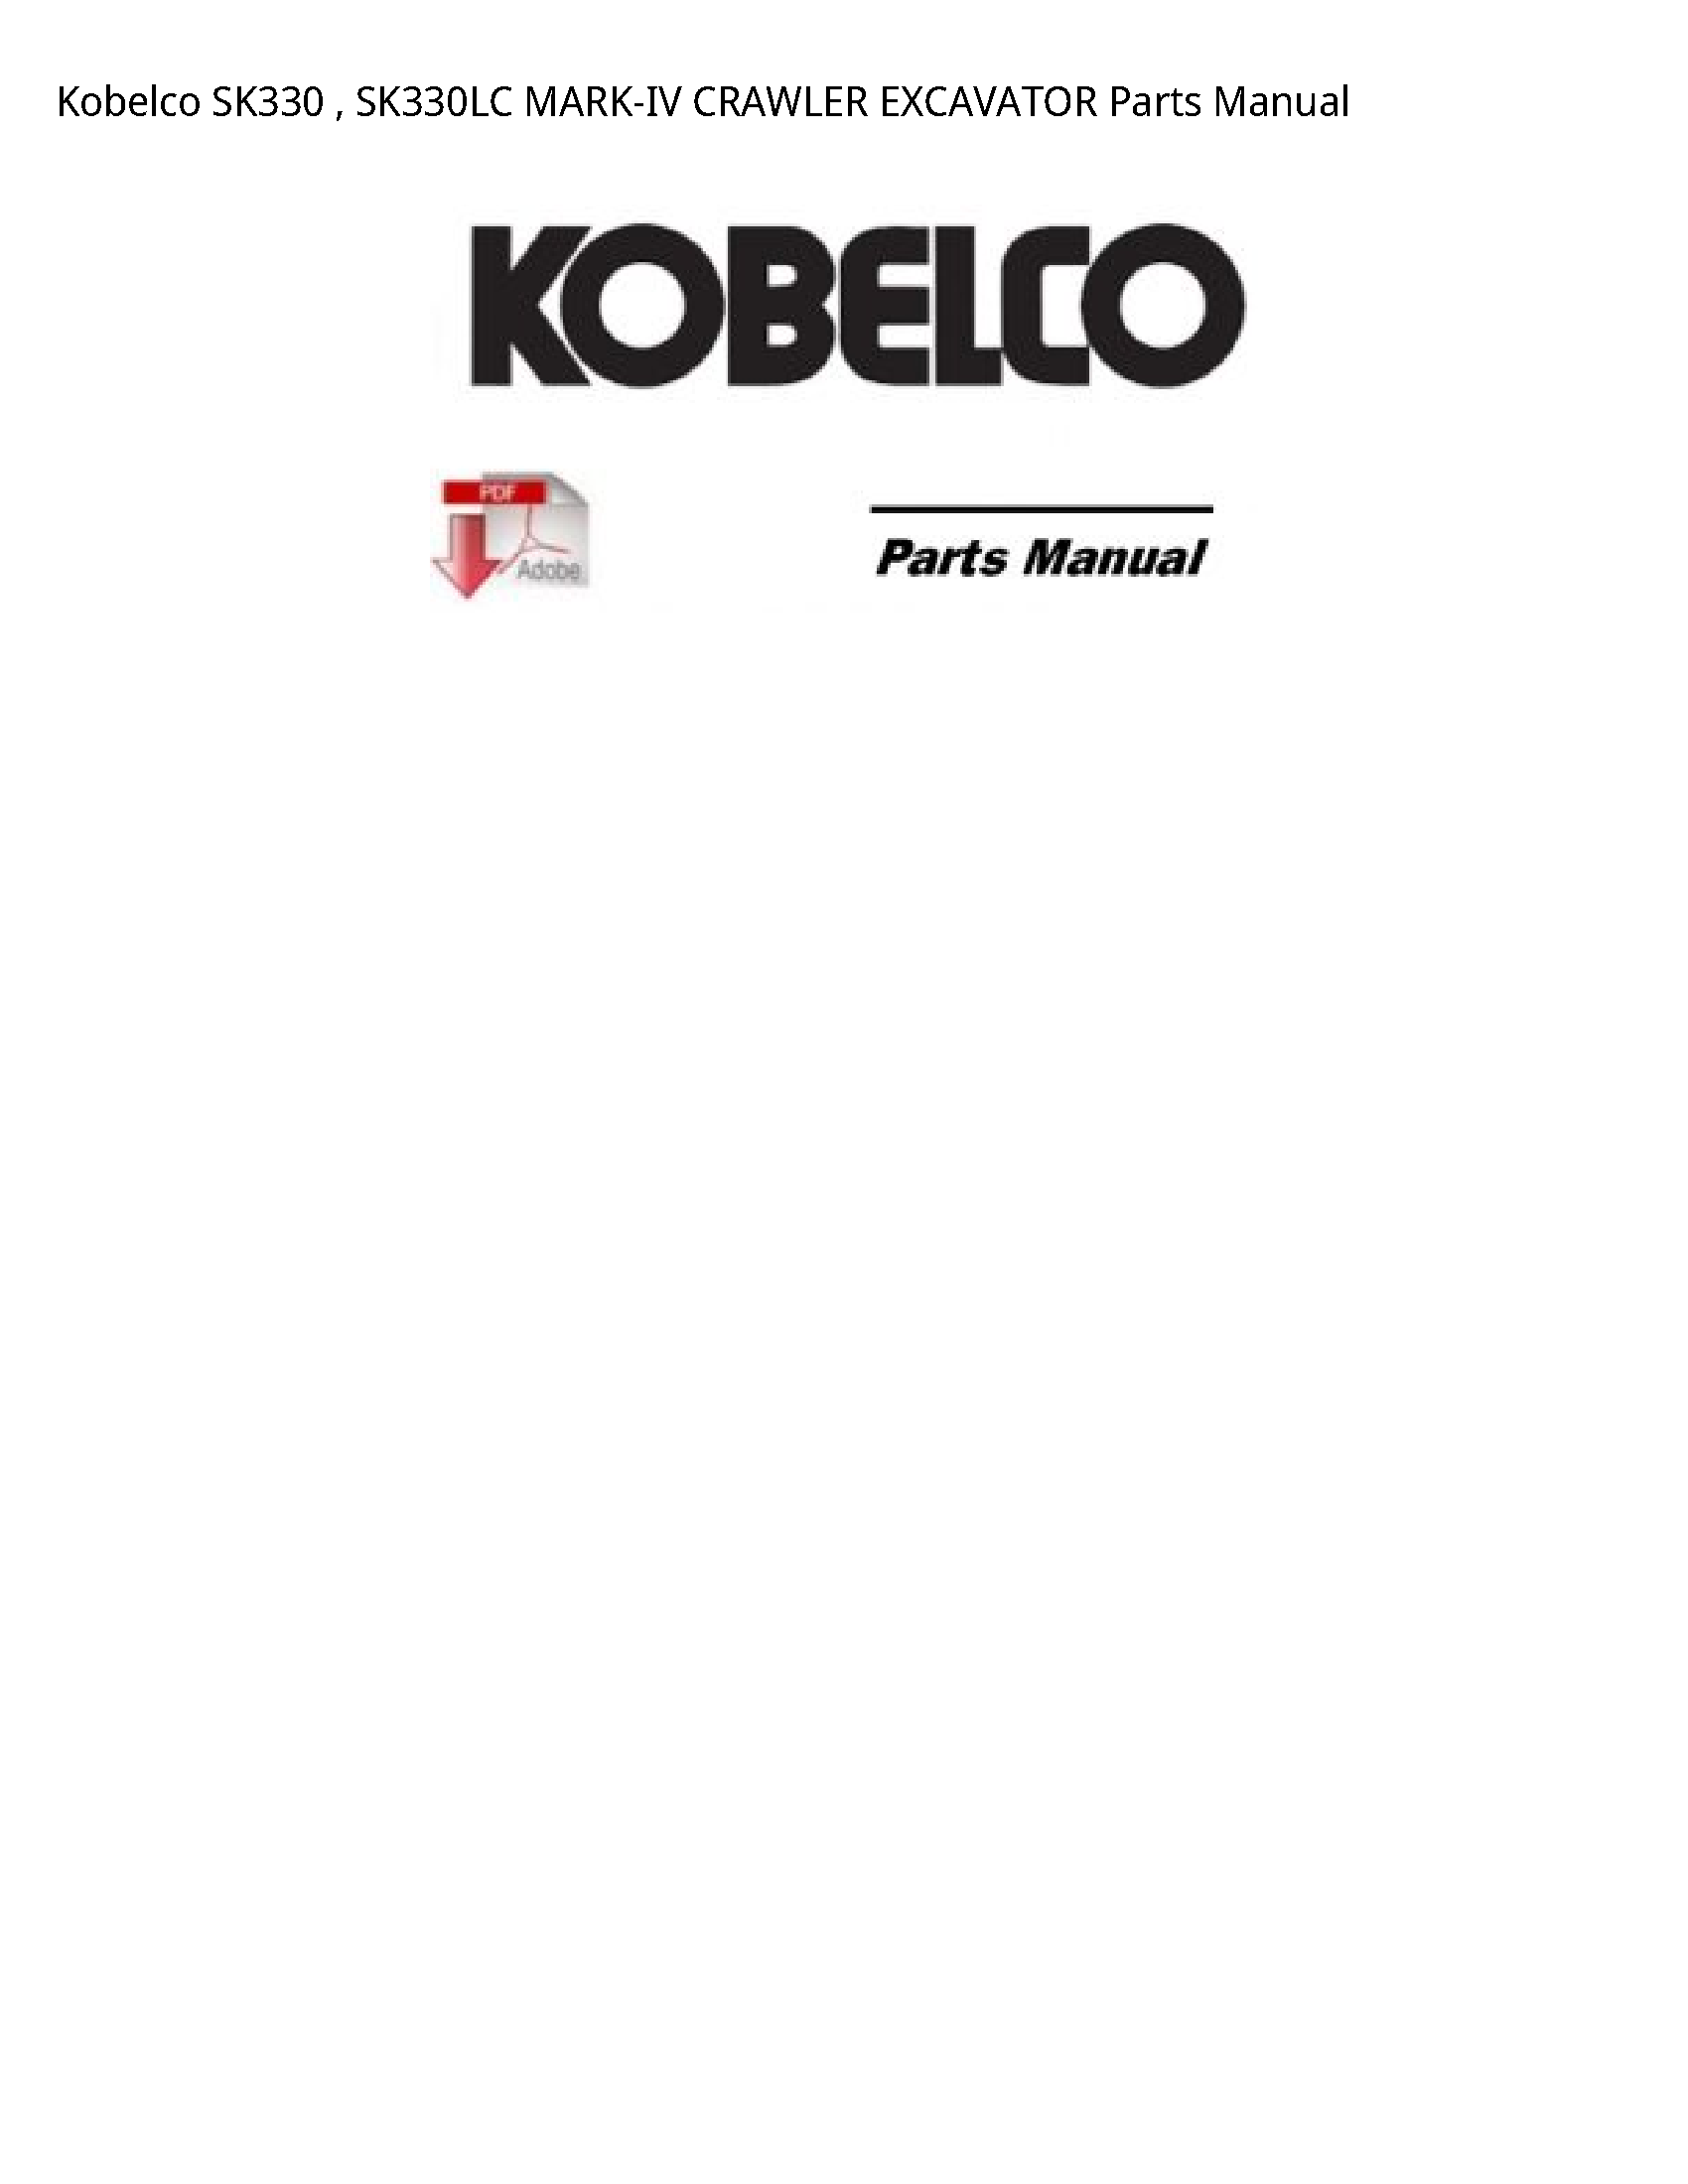 Kobelco SK330 MARK-IV CRAWLER EXCAVATOR Parts manual